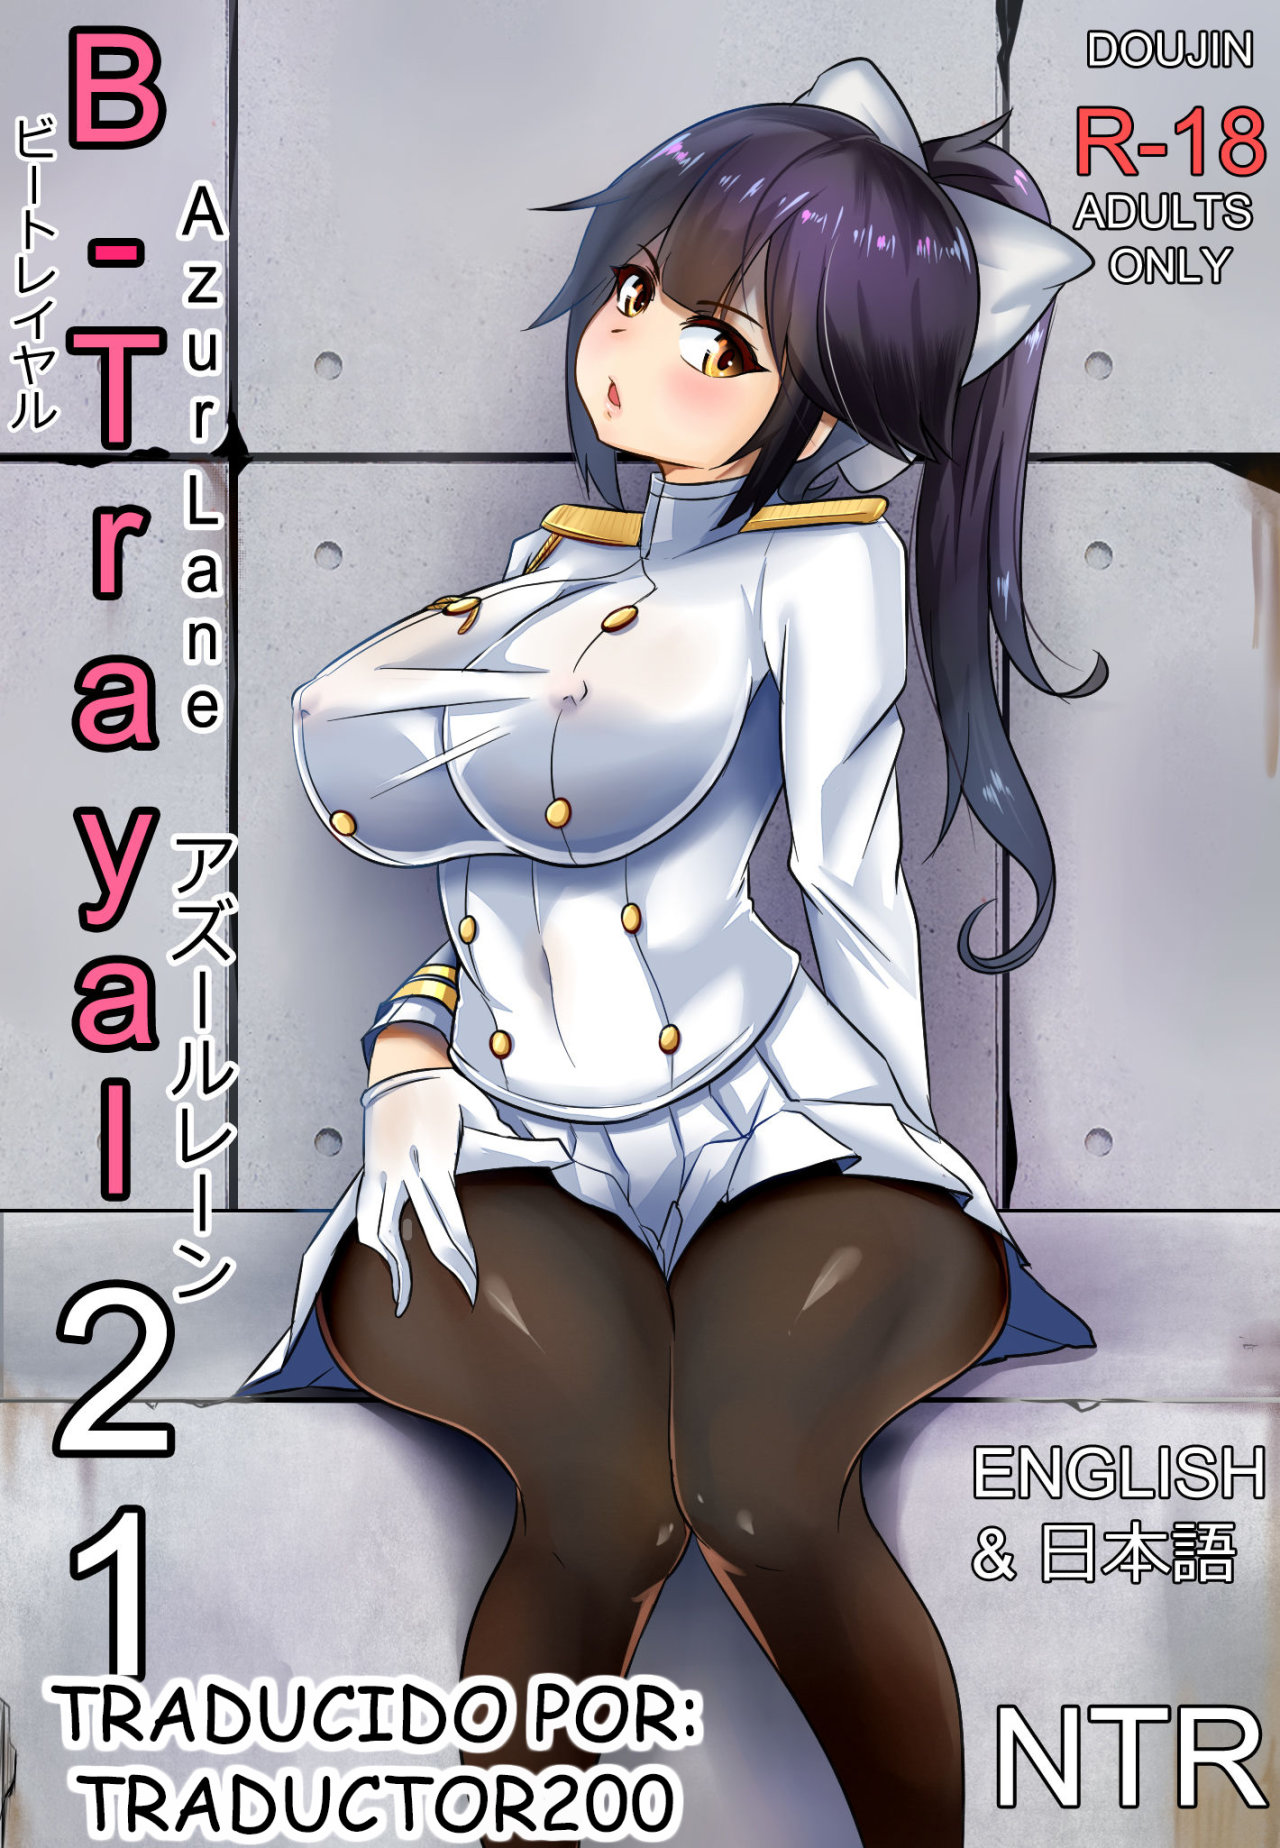 B-TRAYAL 21 TAKAO - 0